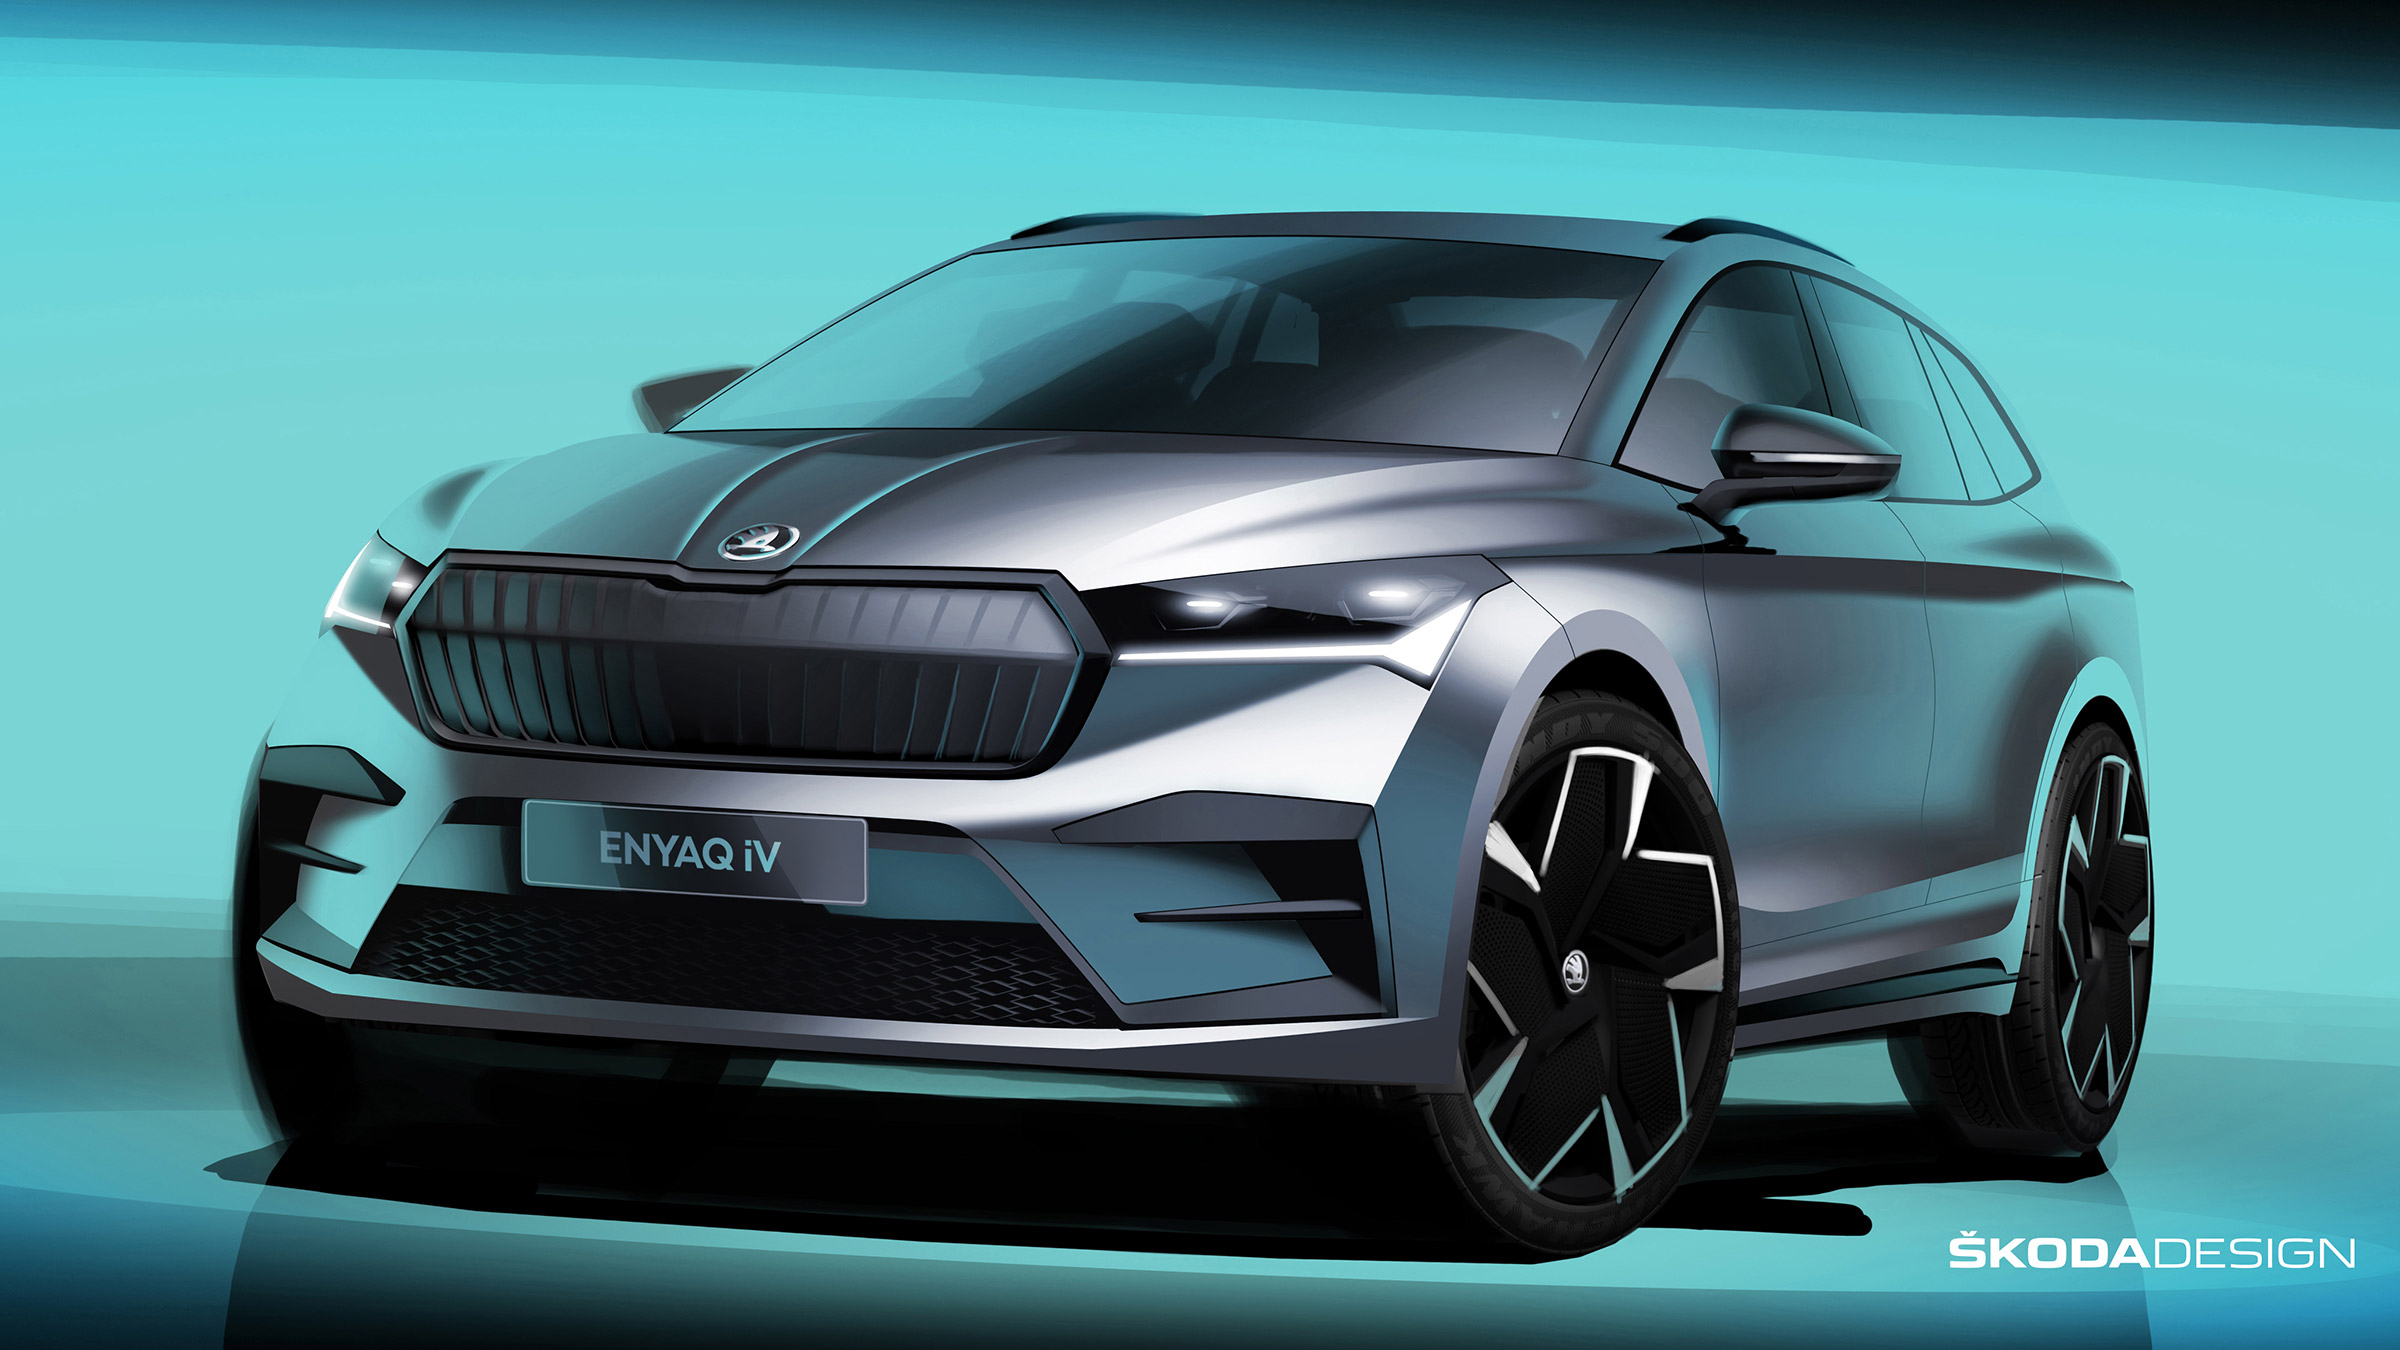 New 2021 Skoda Enyaq electric car teased in sketches 